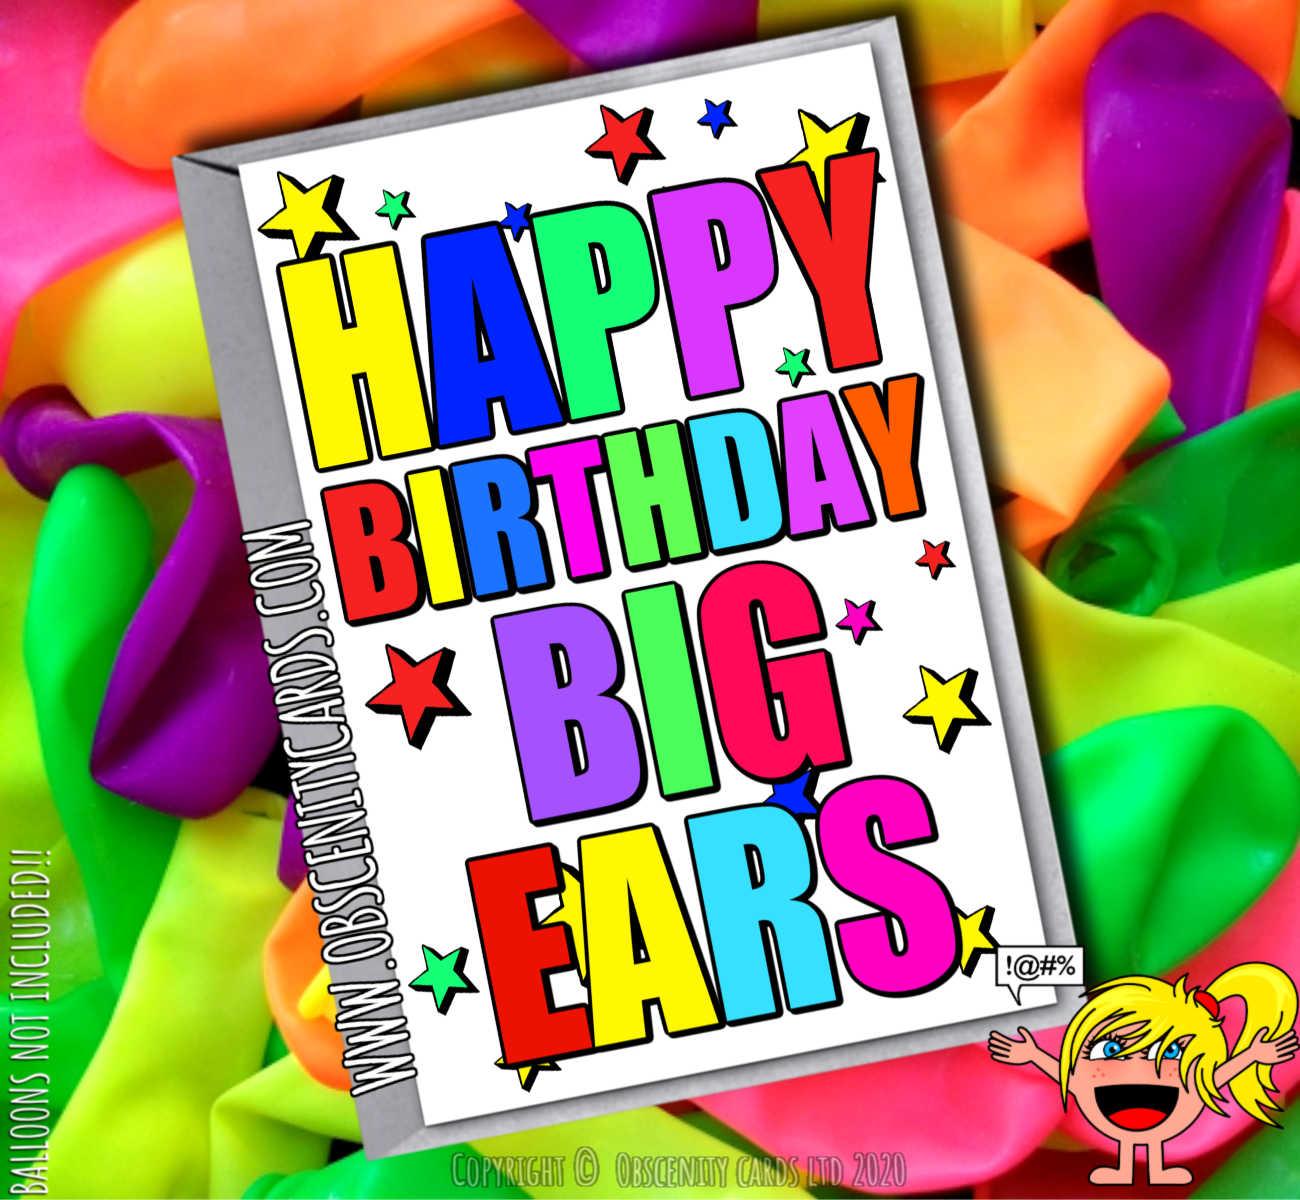 HAPPY BIRTHDAY BIG EARS FUNNY CARD